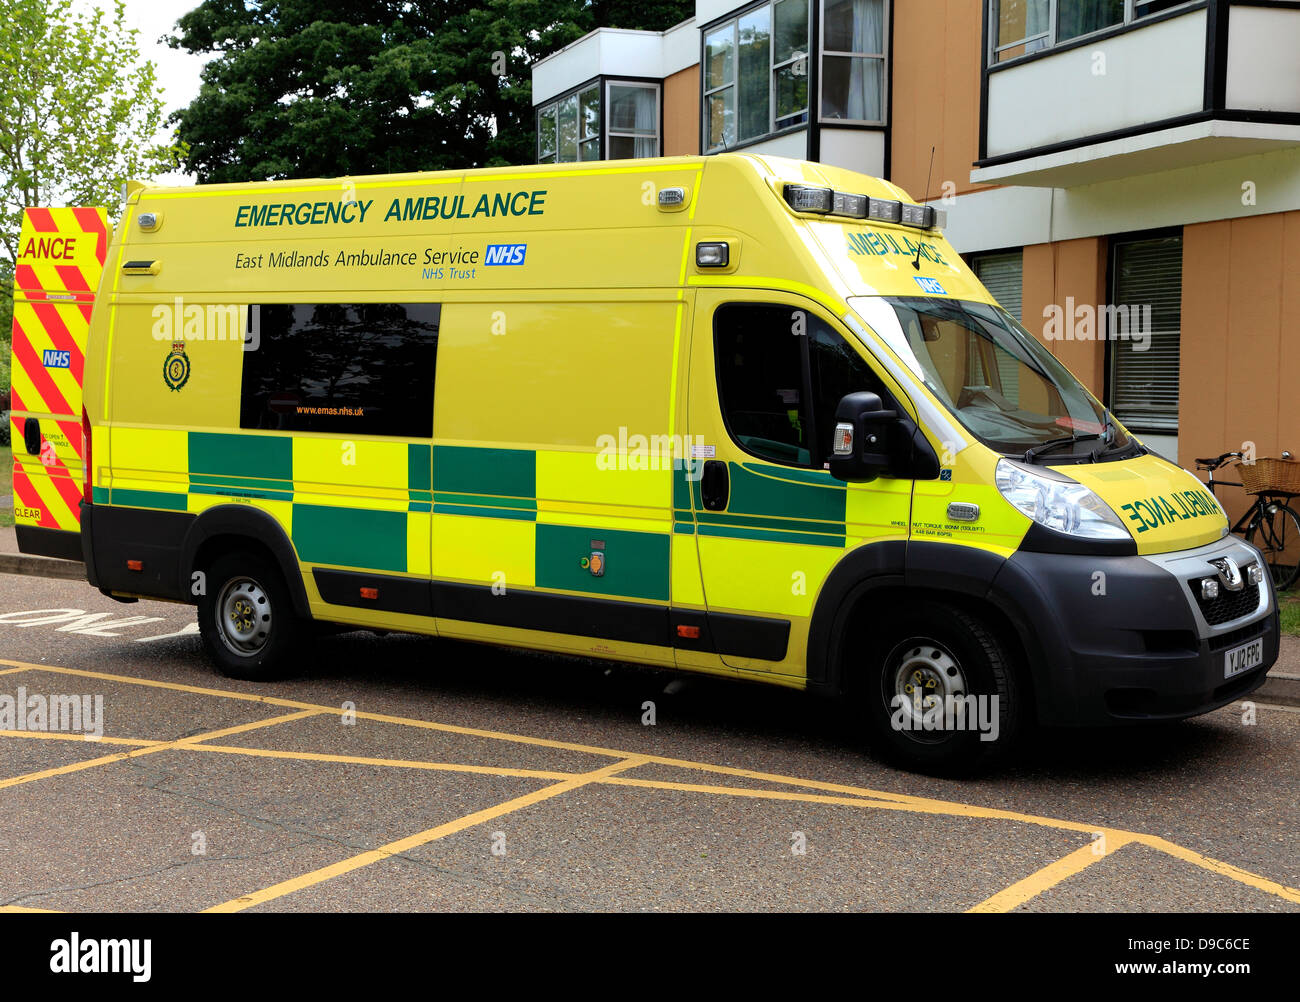 East Midlands Emergency Ambulance Service van, NHS, Kings Lynn, Norfolk, England, English ambulances, vehicle Stock Photo